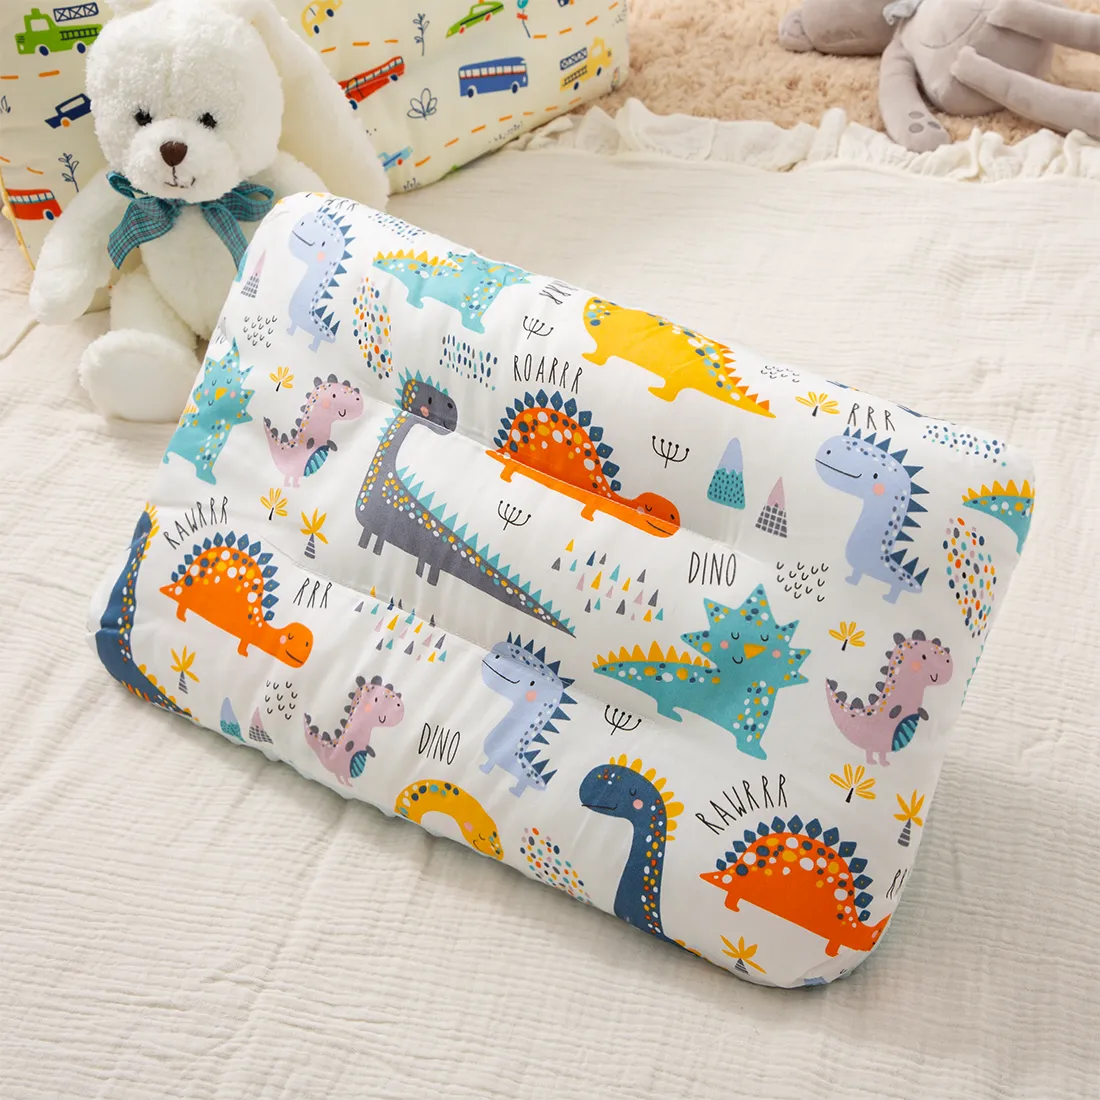 100% Cotton Baby Soothing Pillow Cartoon Dinosaur Unicorn Pattern Kids Soft Elastic Sleeping Pillows